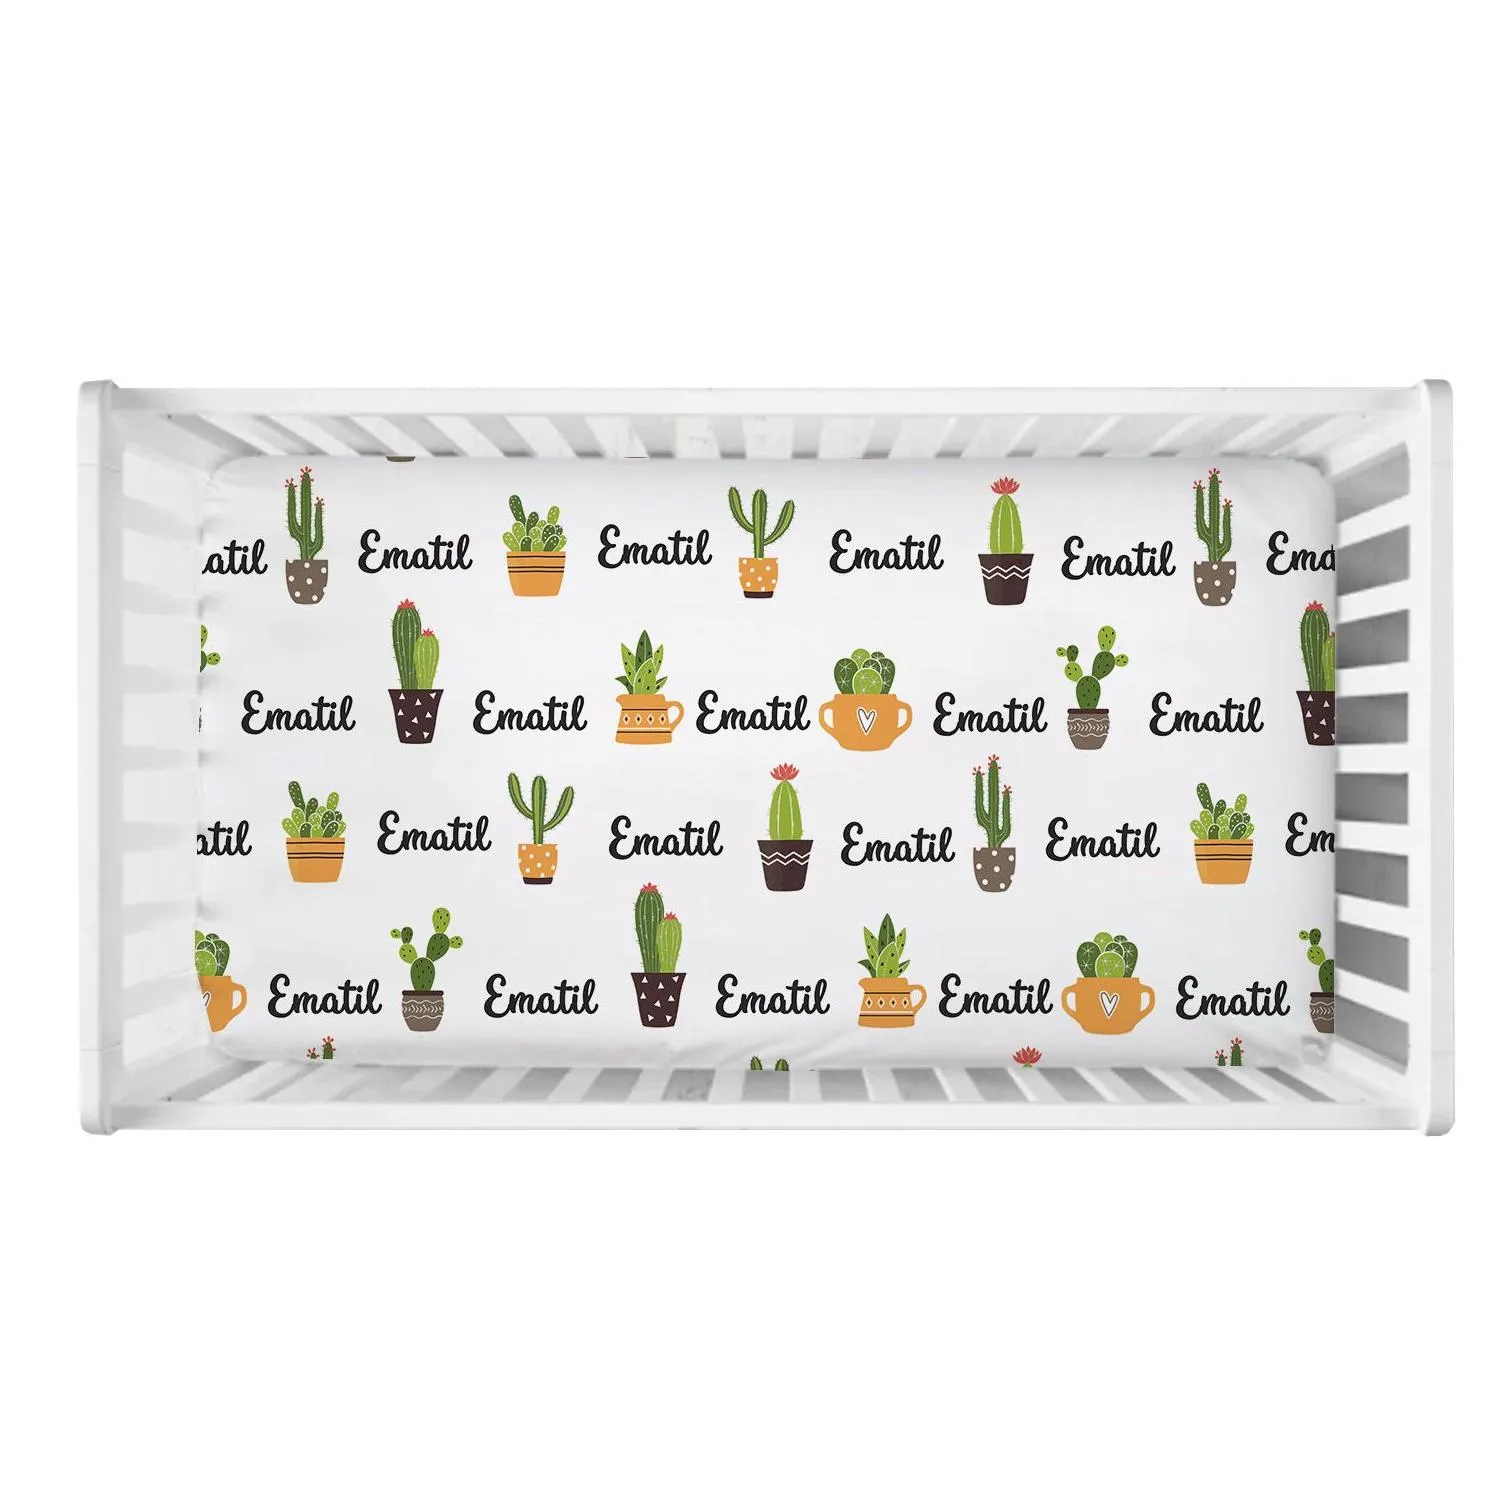 LVYZIHO Prickly Pear Cactus Crib Bedding Set, Custom Name Baby Bedding Set, Baby Shower Gift Bedding Set